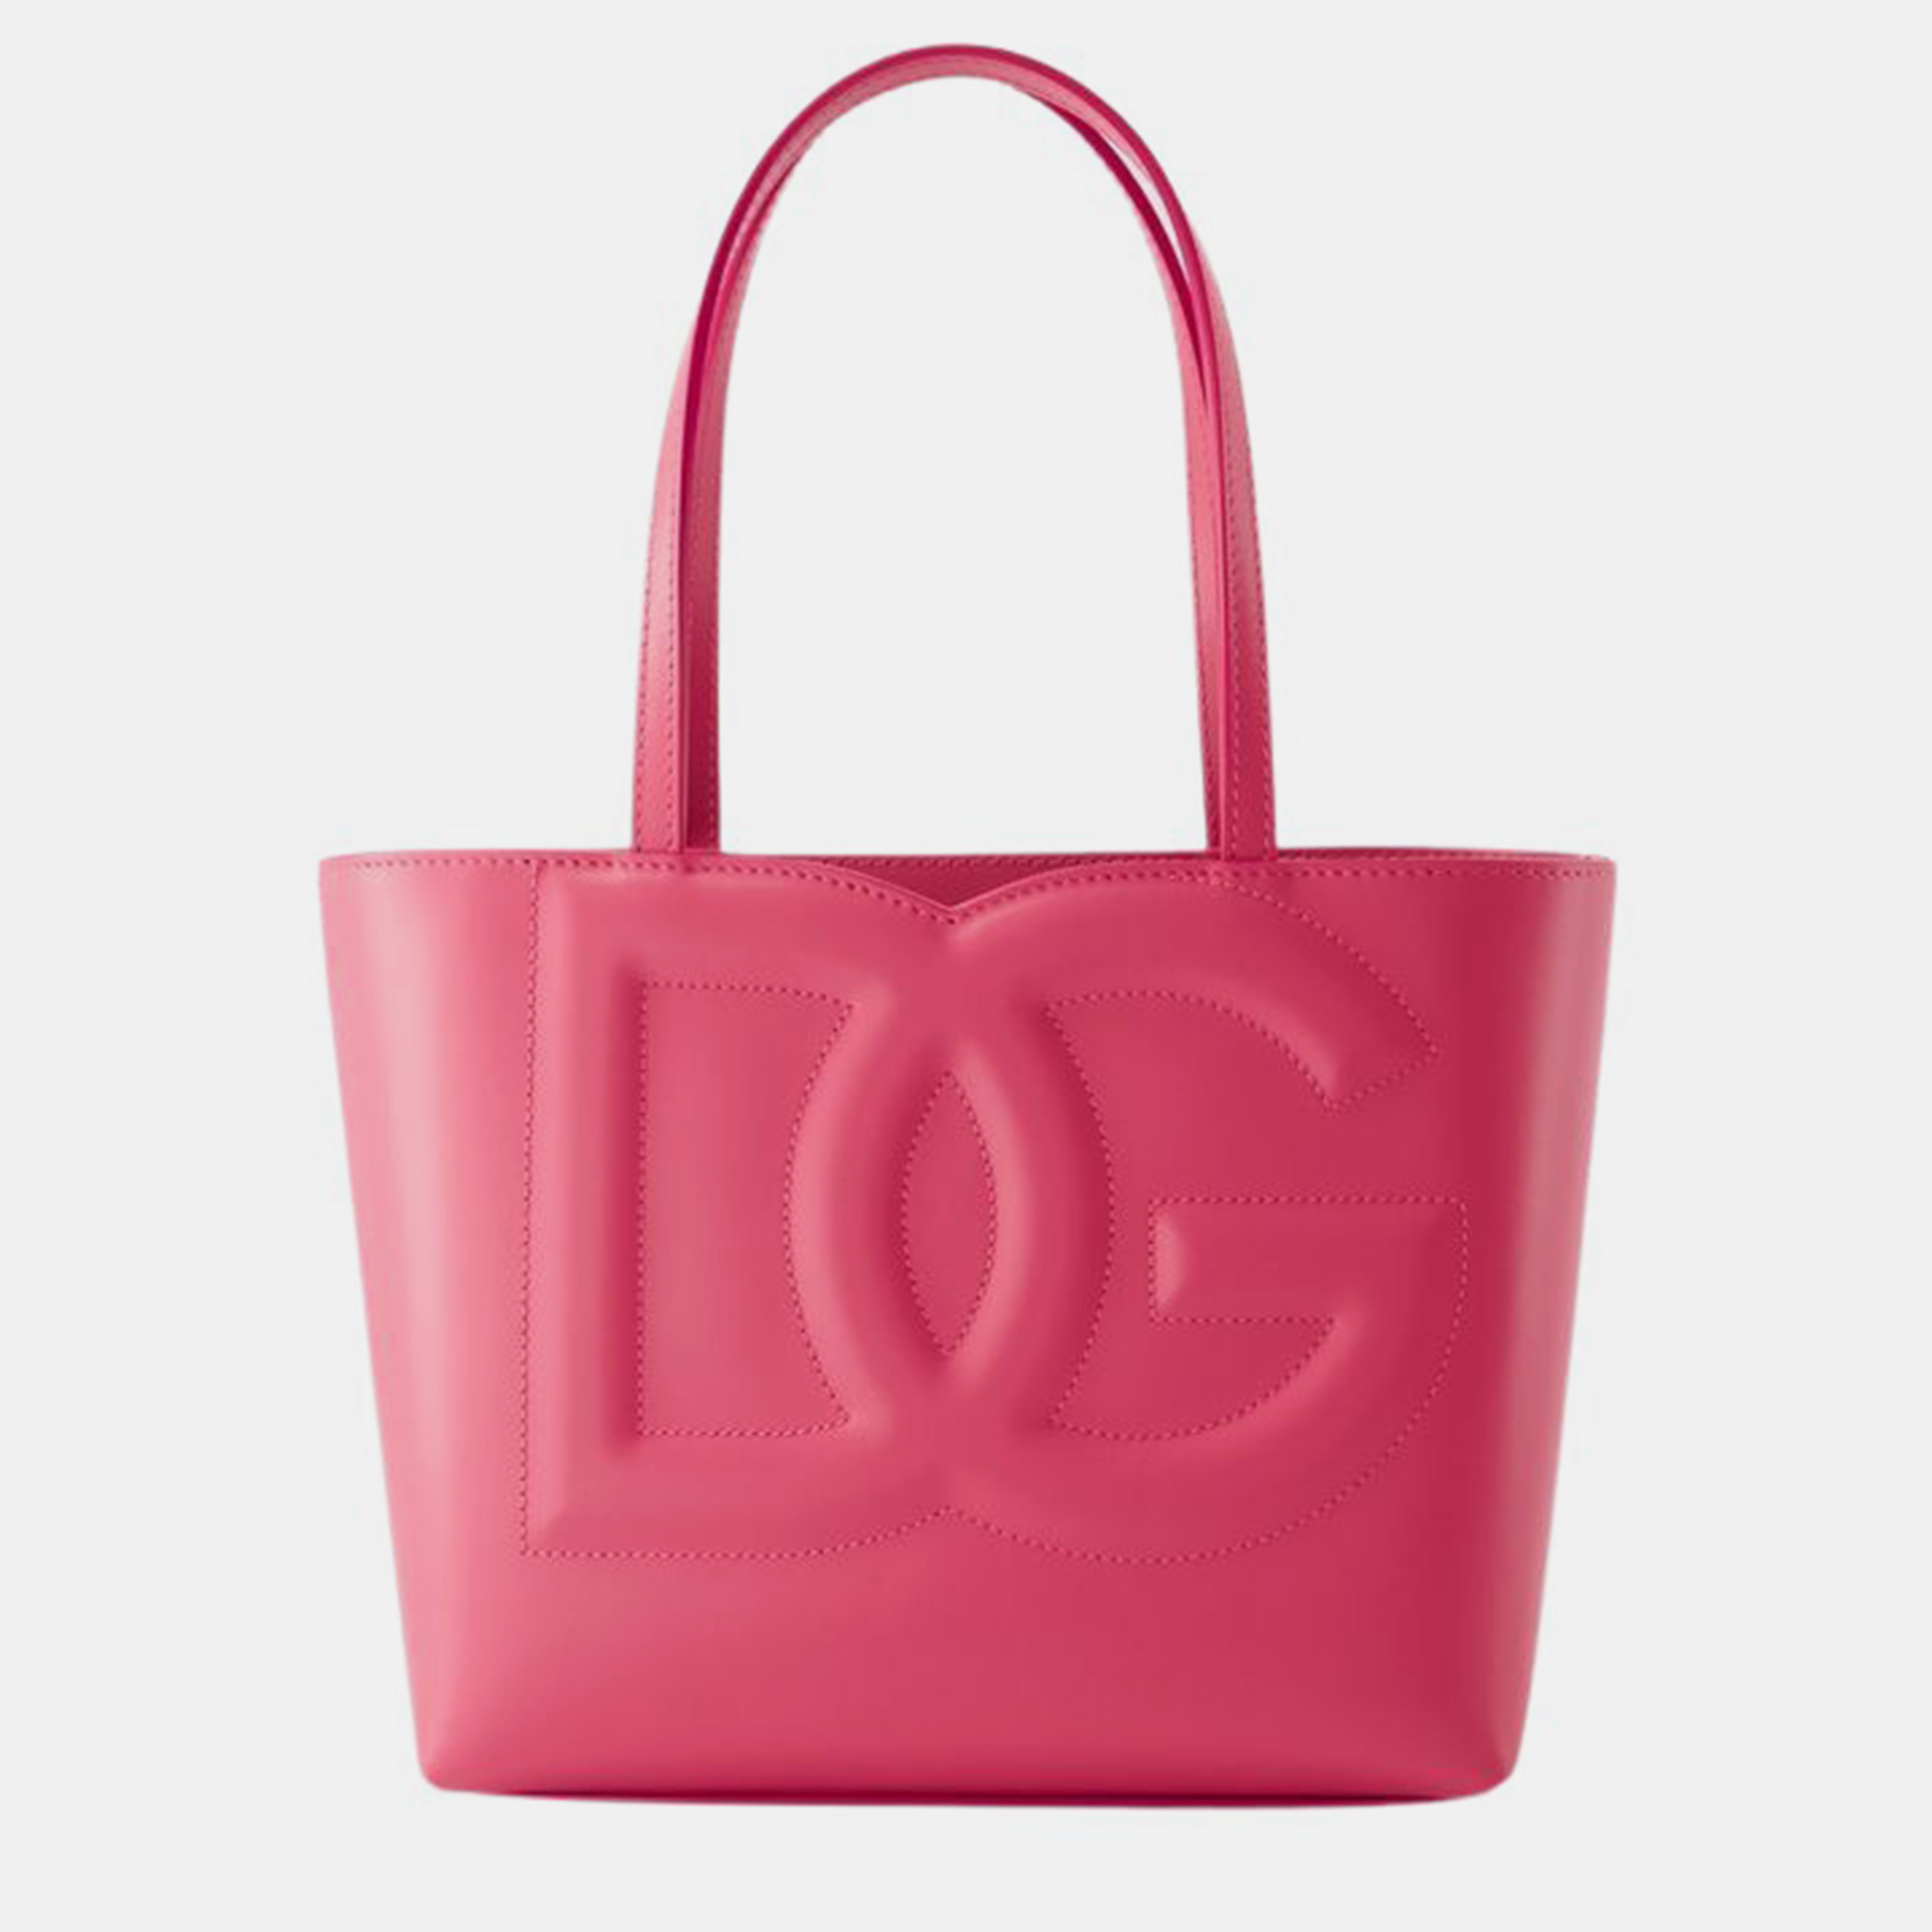 Dolce & Gabbana Pink Leather DG Logo Tote Bag